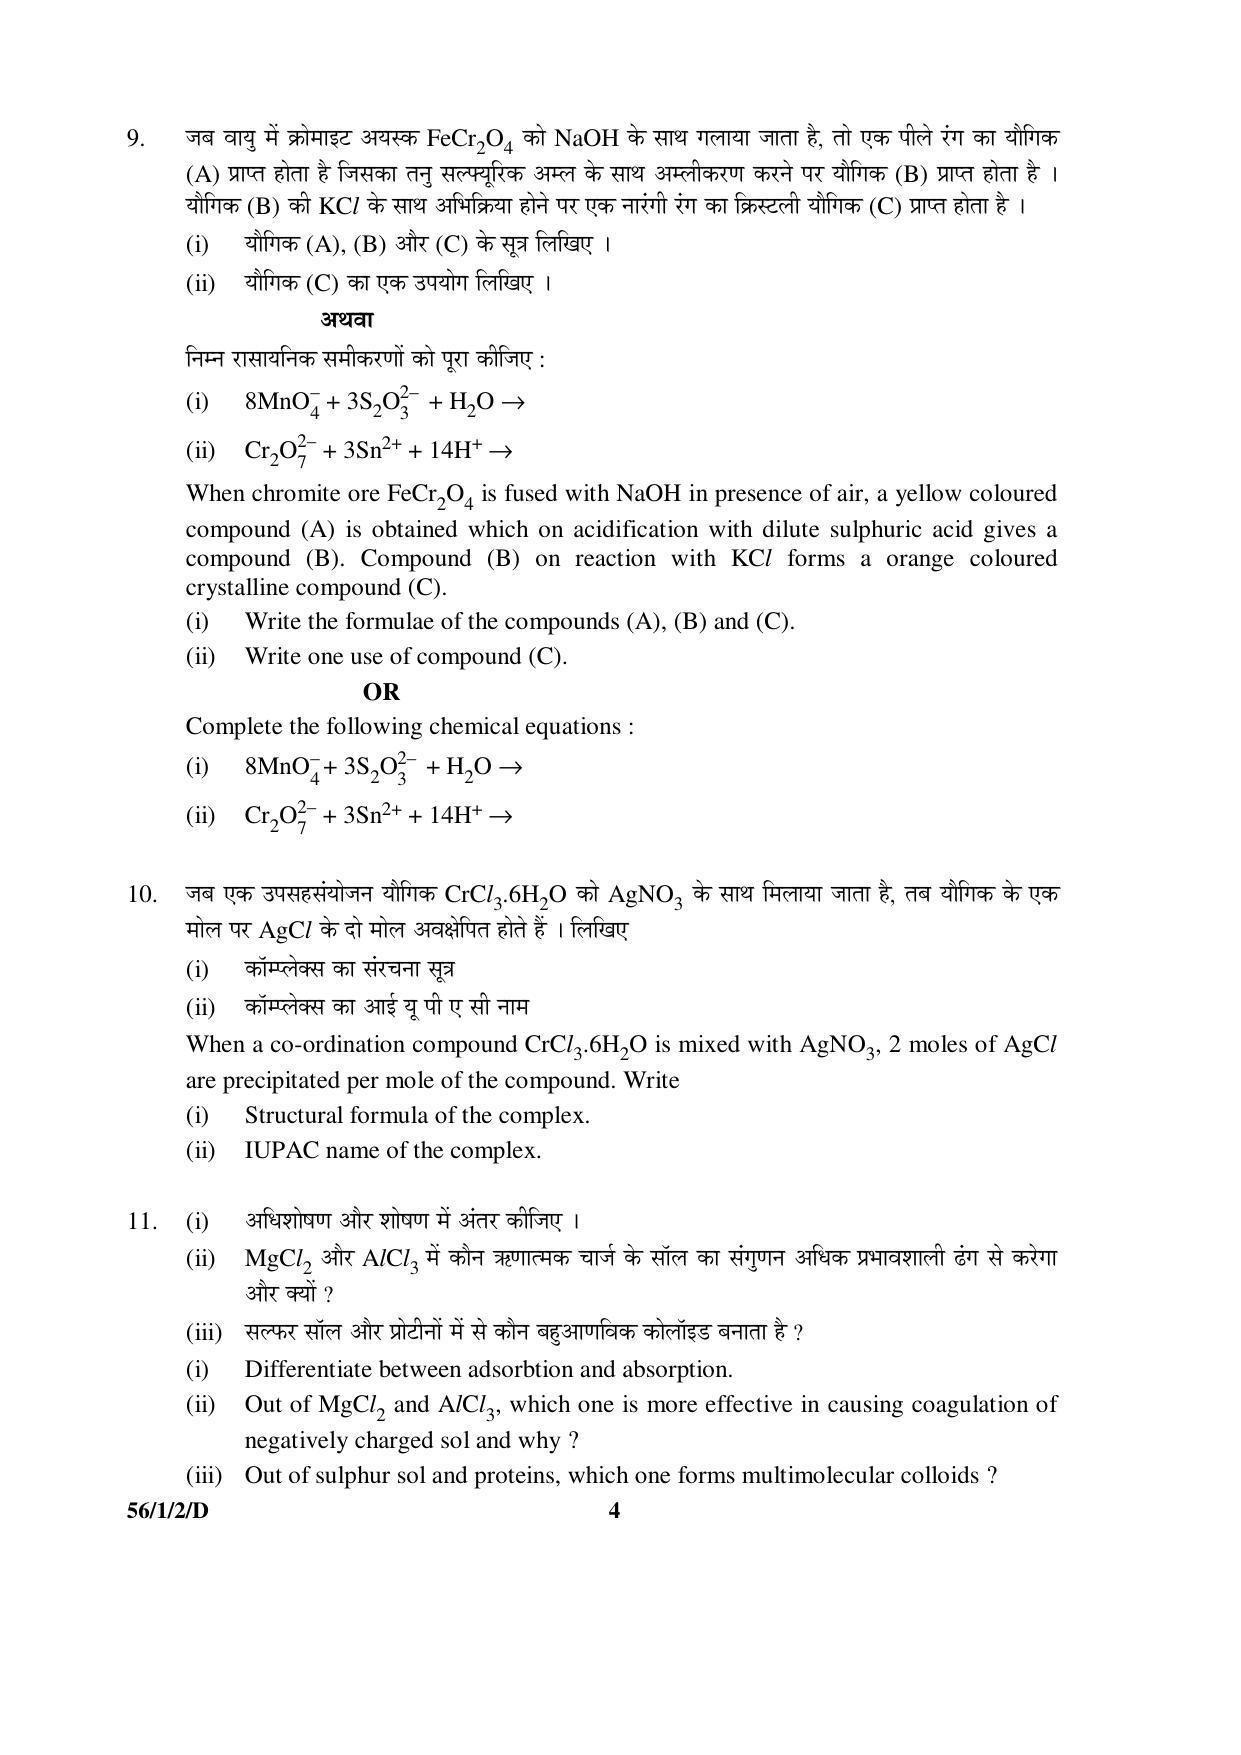 CBSE Class 12 56-1-2-D CHEMISTRY 2016 Question Paper - Page 4